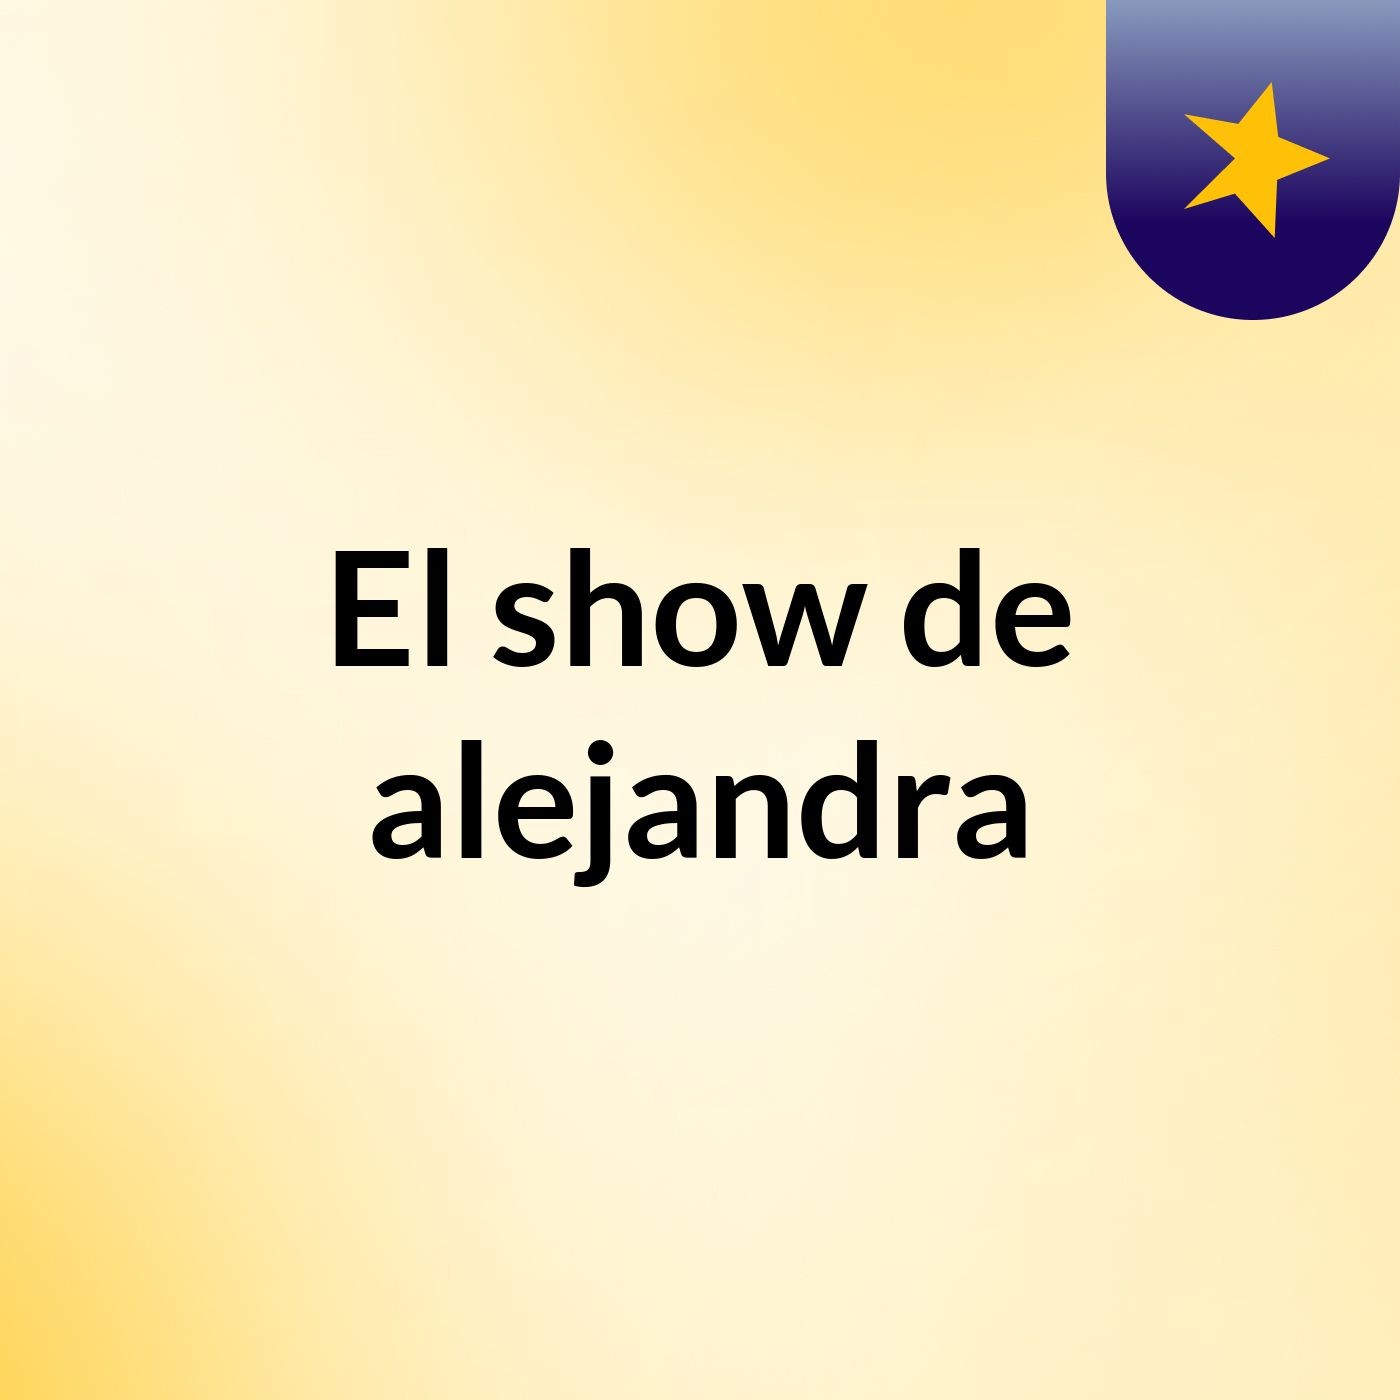 Episodio 5 - El show de alejandra